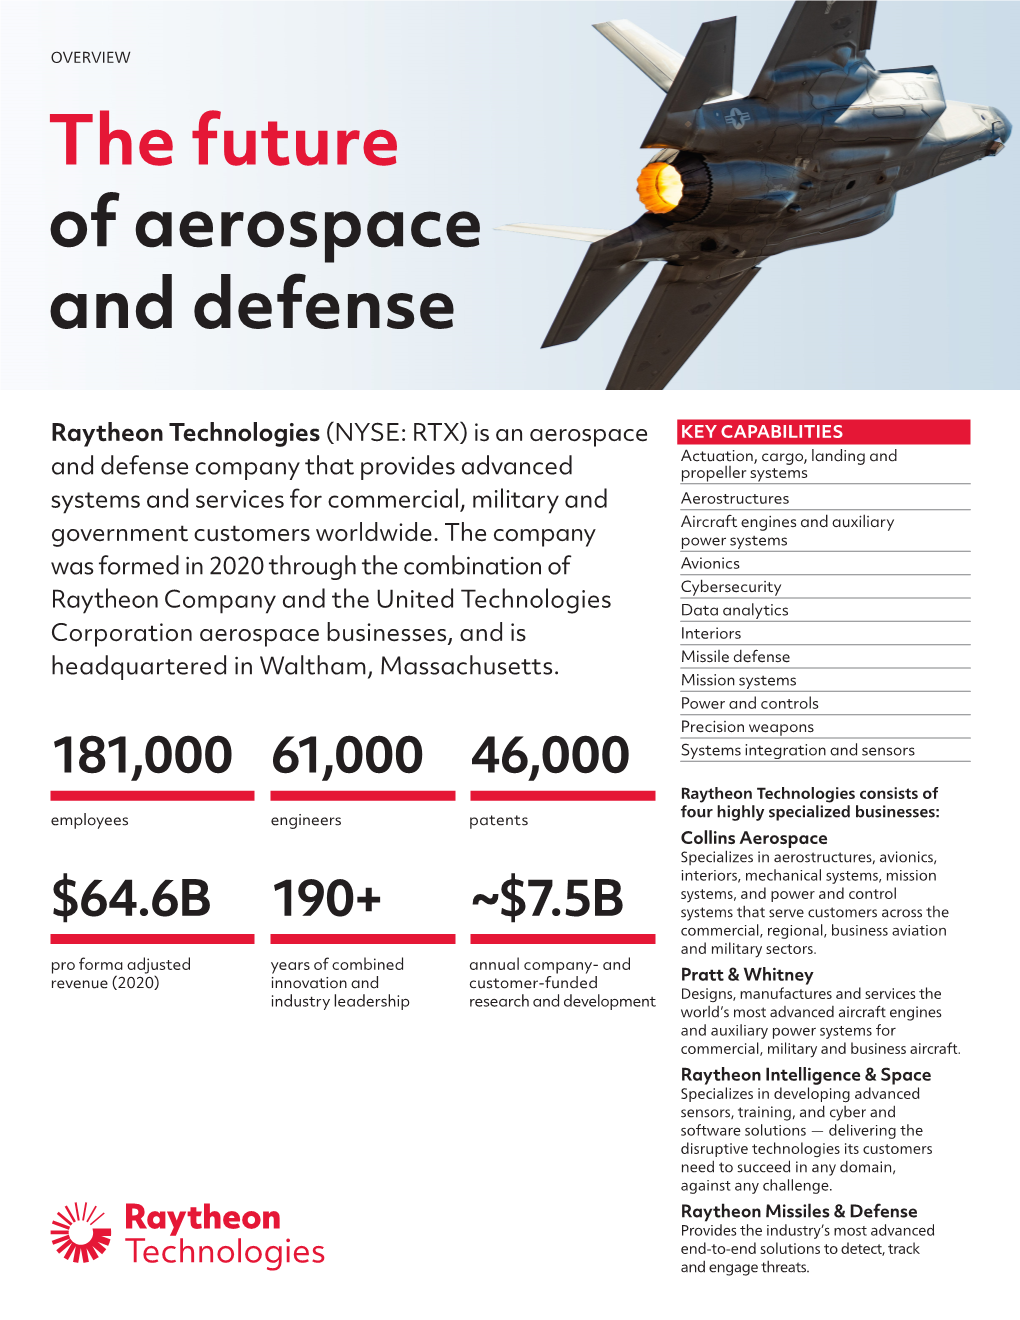 The Future of Aerospace and Defense